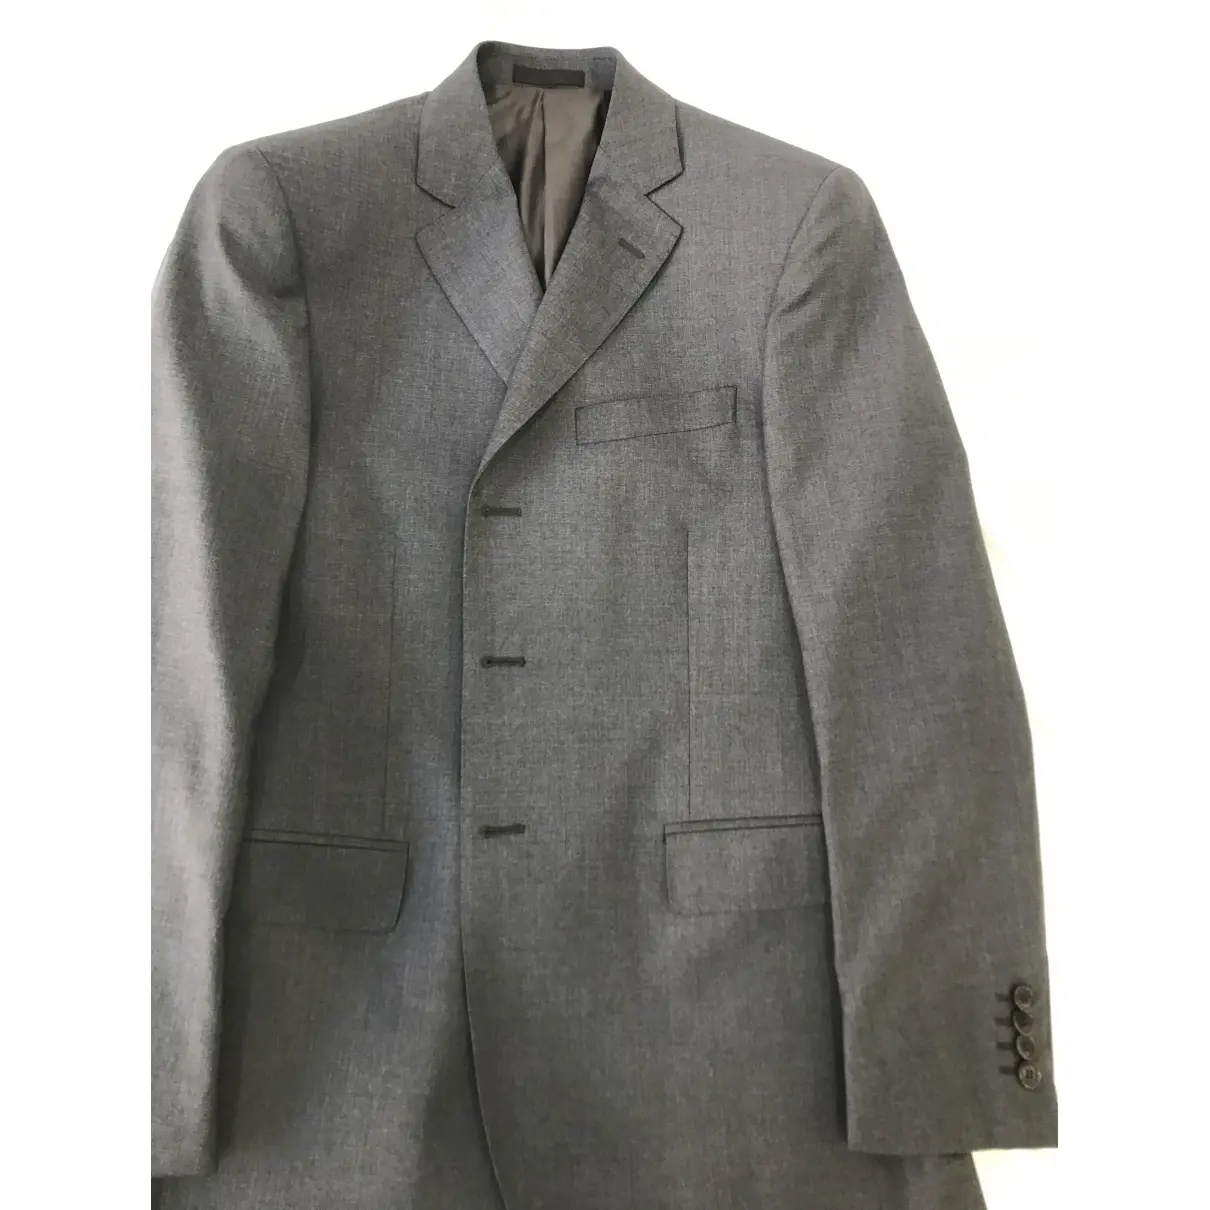 Wool suit Pierre Cardin - Vintage